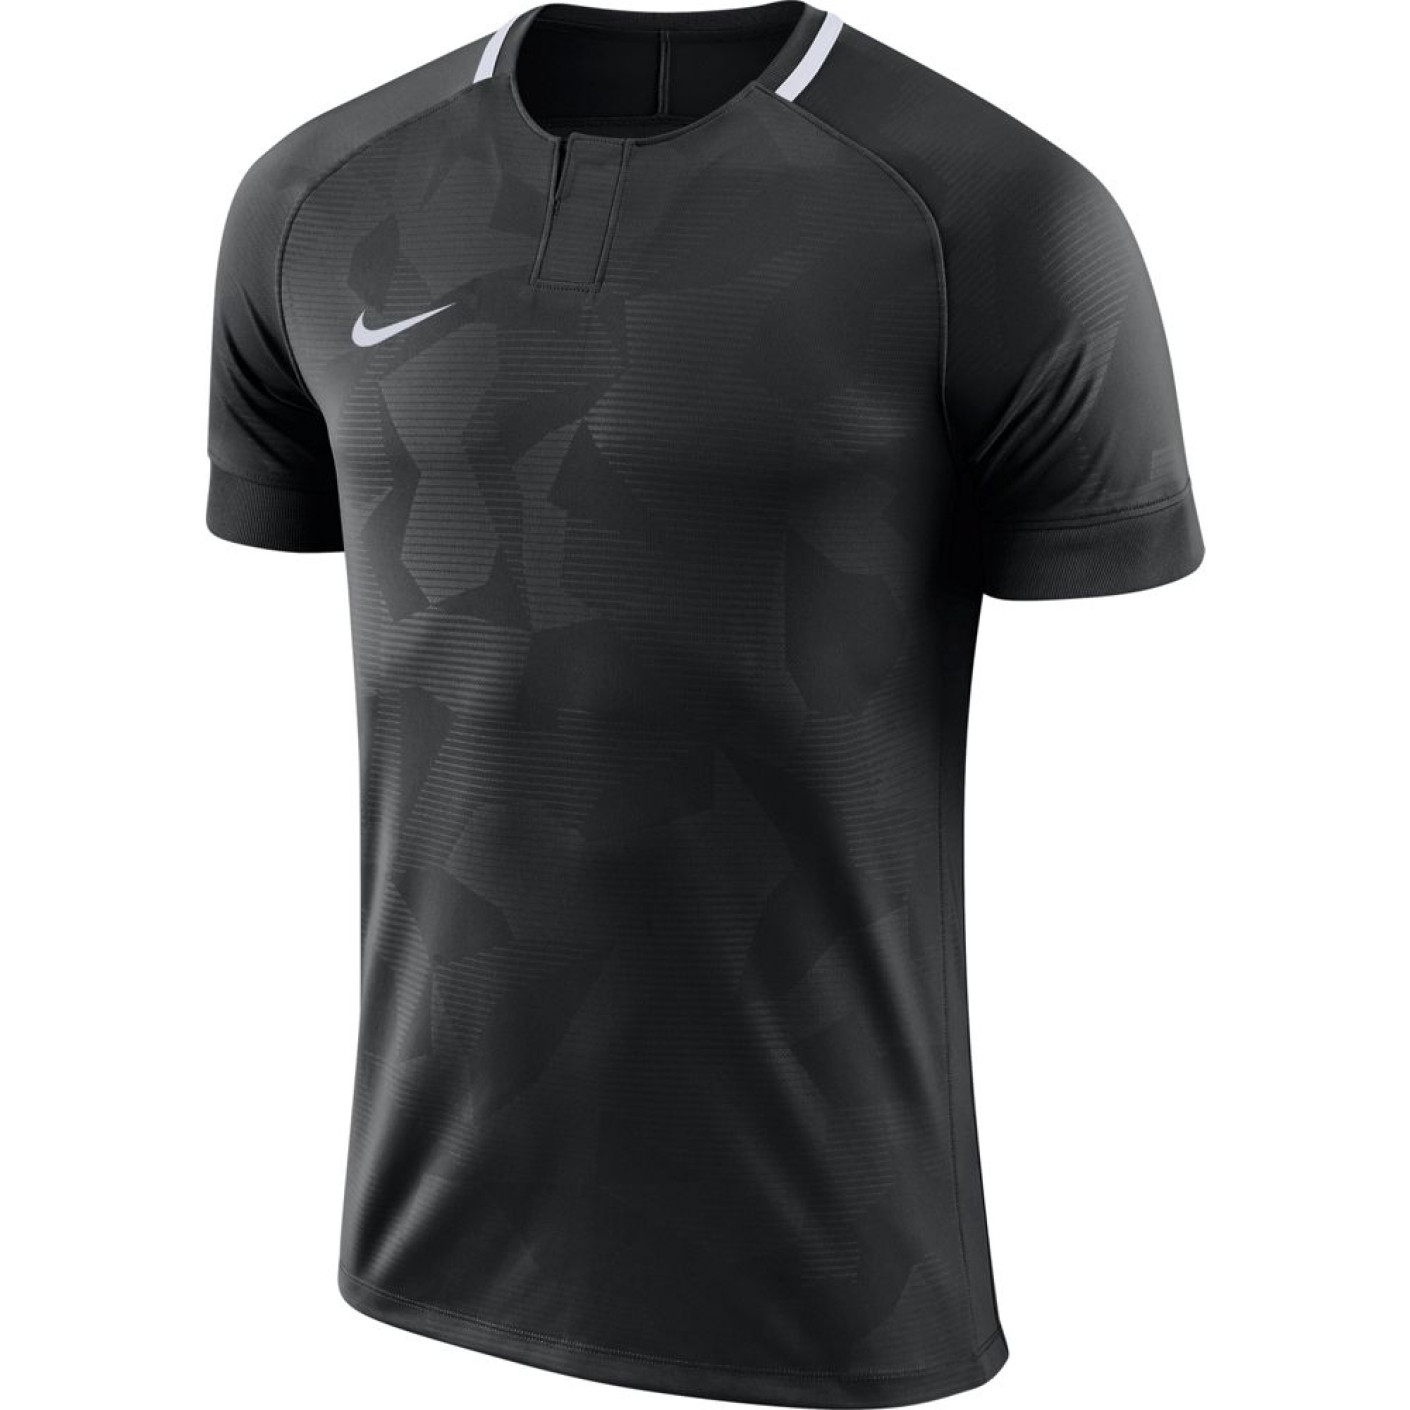 Nike Dry Challenge II Shirt Black White